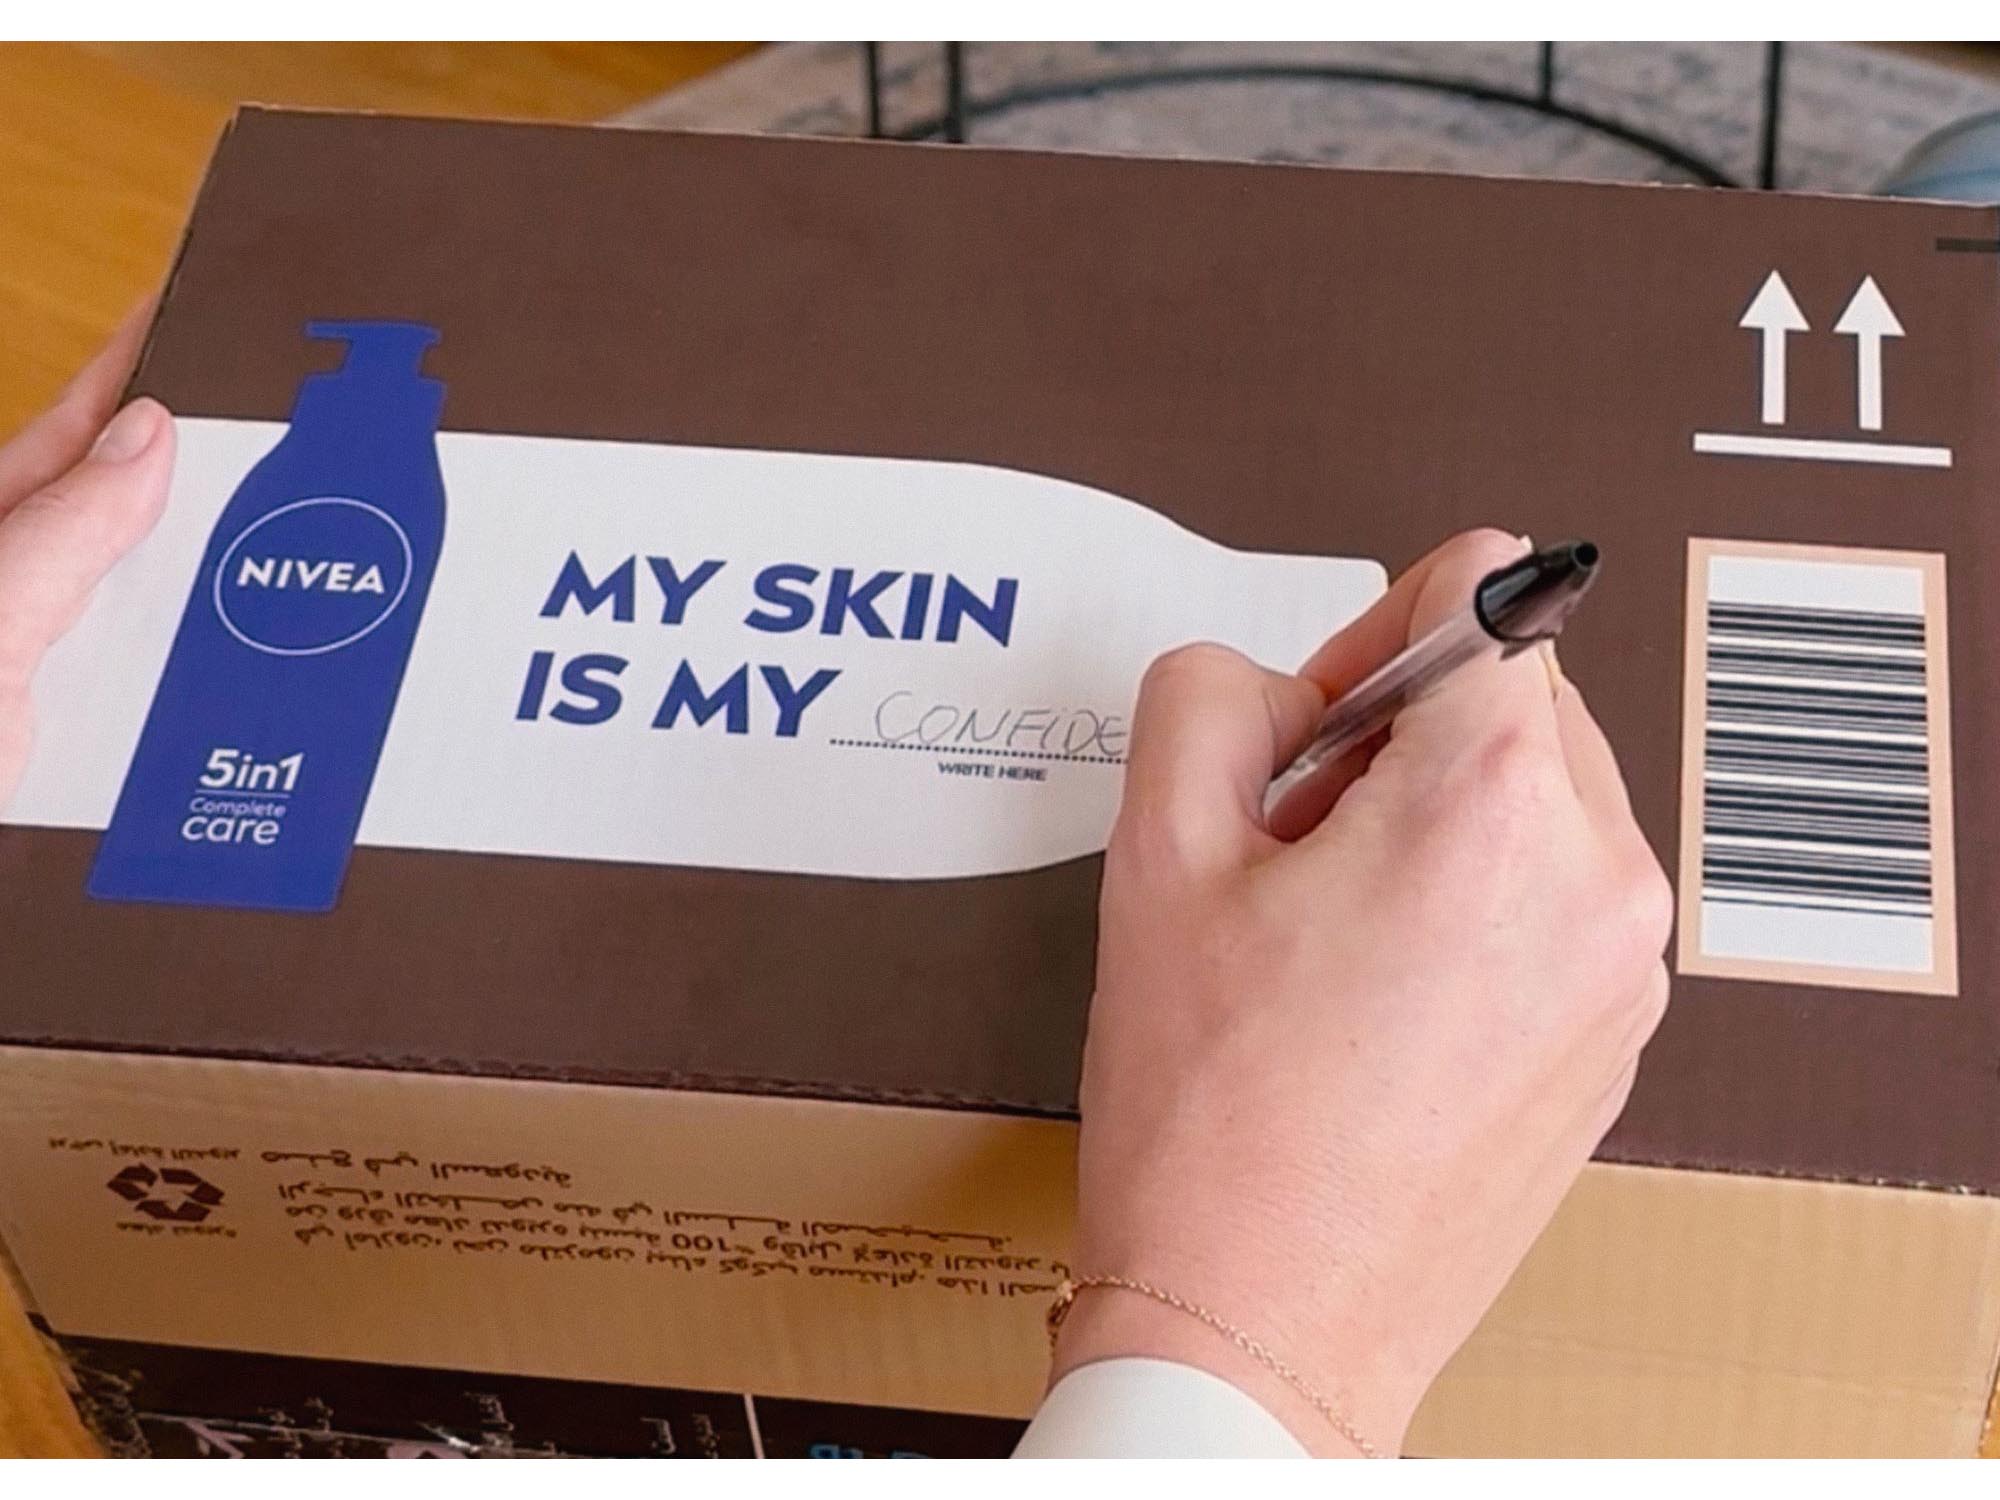 Nivea's campaign seeks to inspire a skin celebration movement in Saudi Arabia